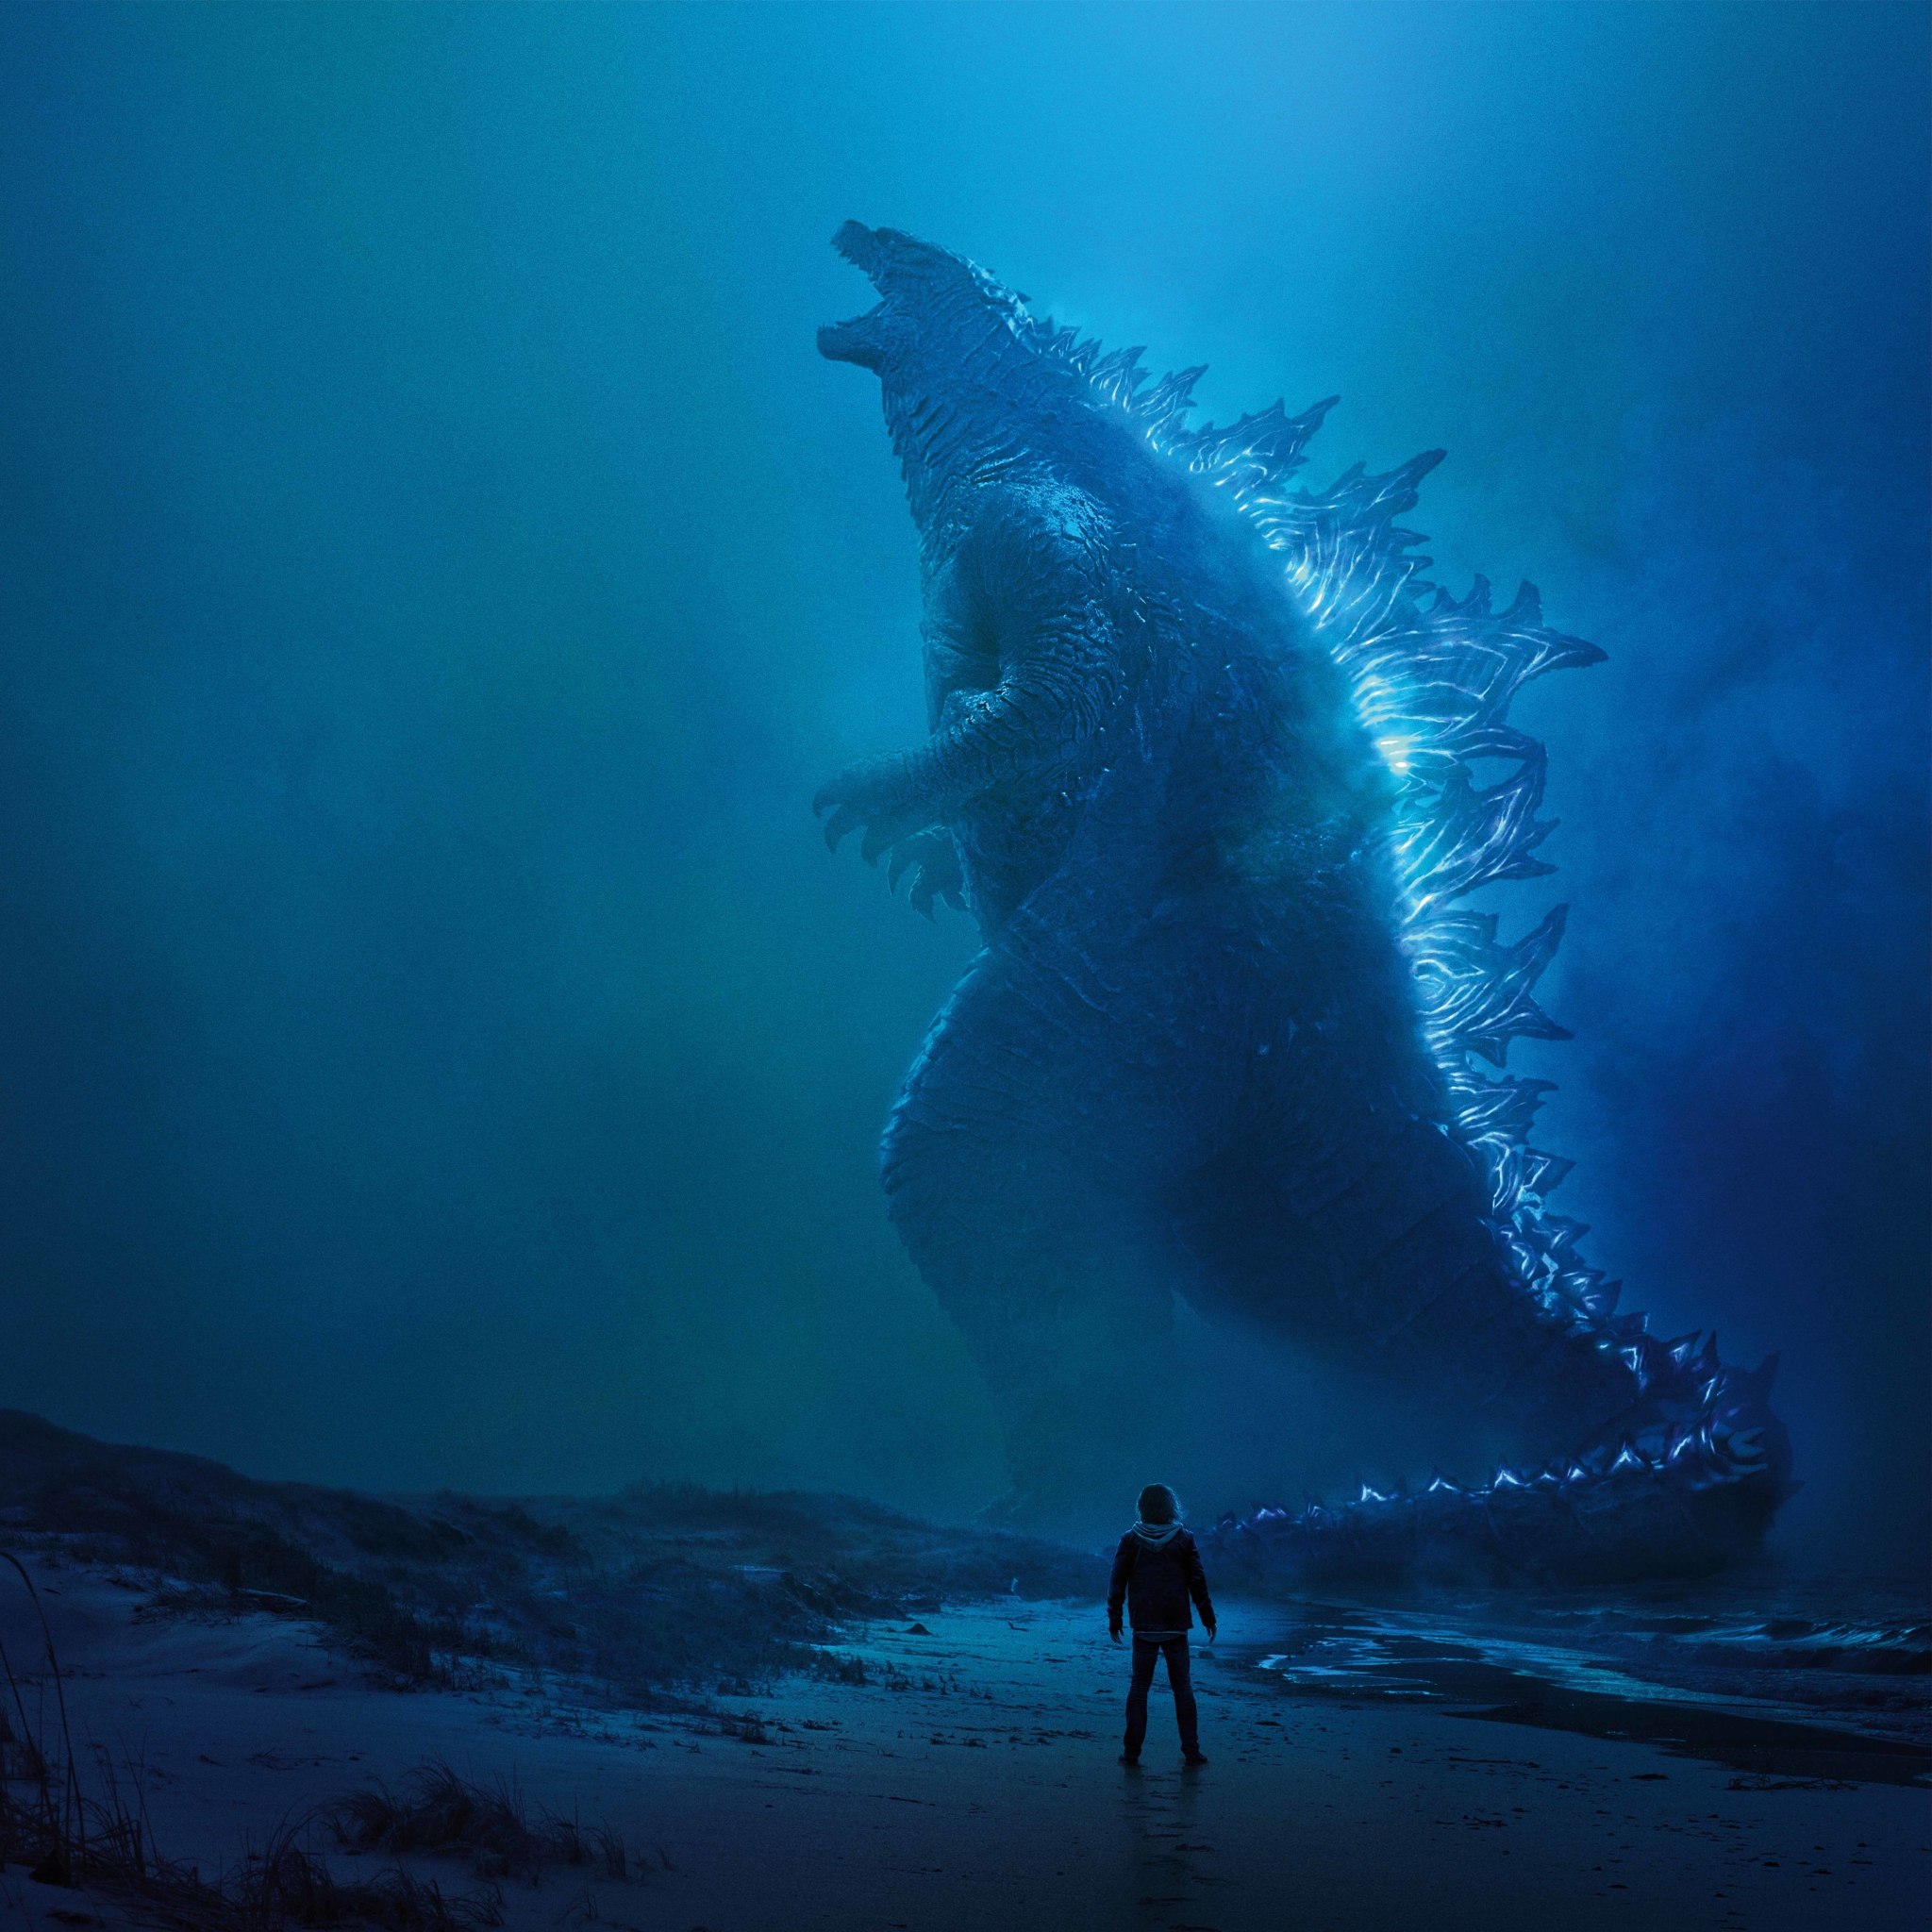 2048x2048 Godzilla King of the Monsters Poster 8K Ipad Air ...